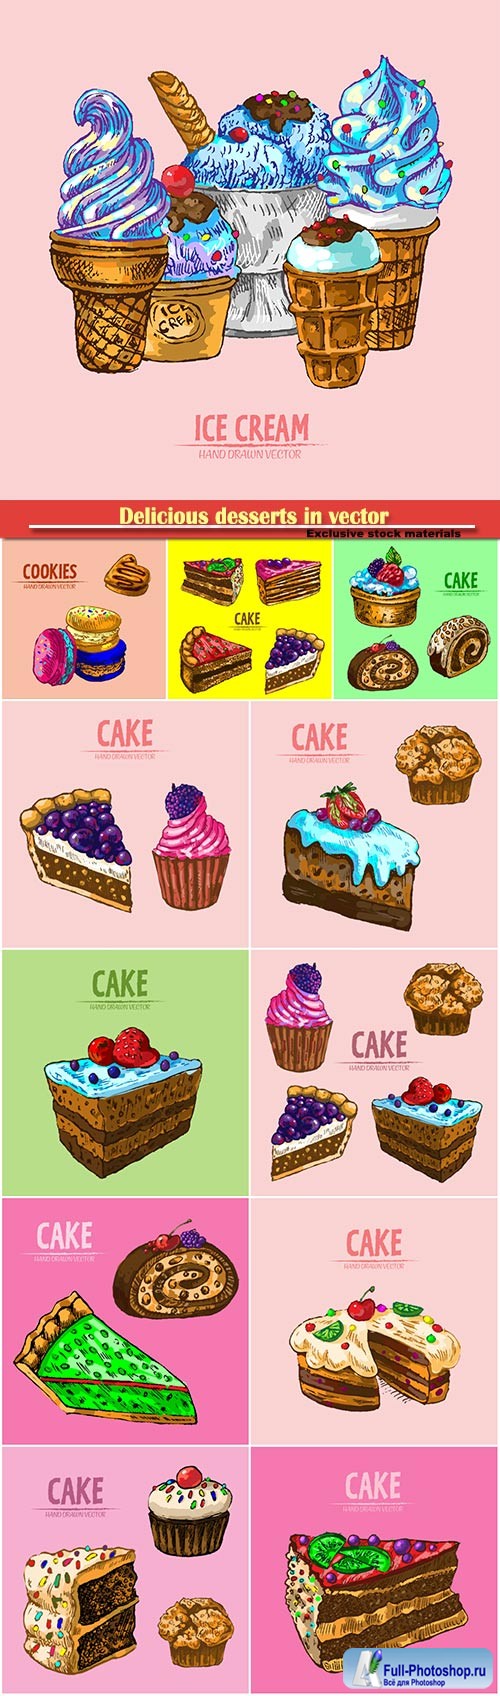 Delicious desserts in vector, cakes and ice cream